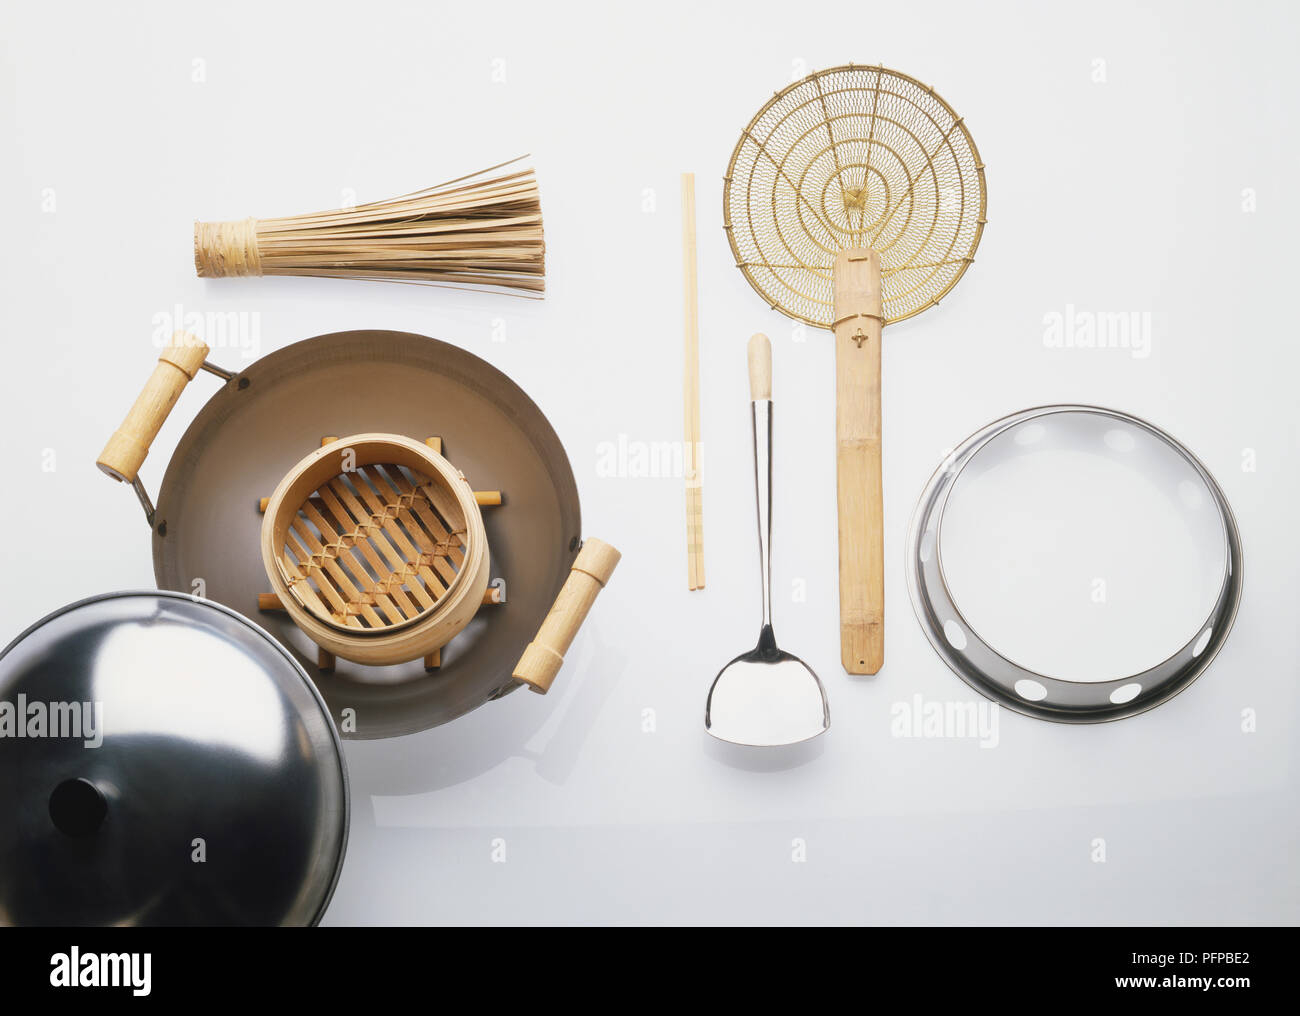 https://c8.alamy.com/comp/PFPBE2/assorted-kitchen-utensils-wok-wok-brush-bamboo-steamer-chopstick-bamboo-strainer-wok-scoop-wok-stand-view-from-above-PFPBE2.jpg